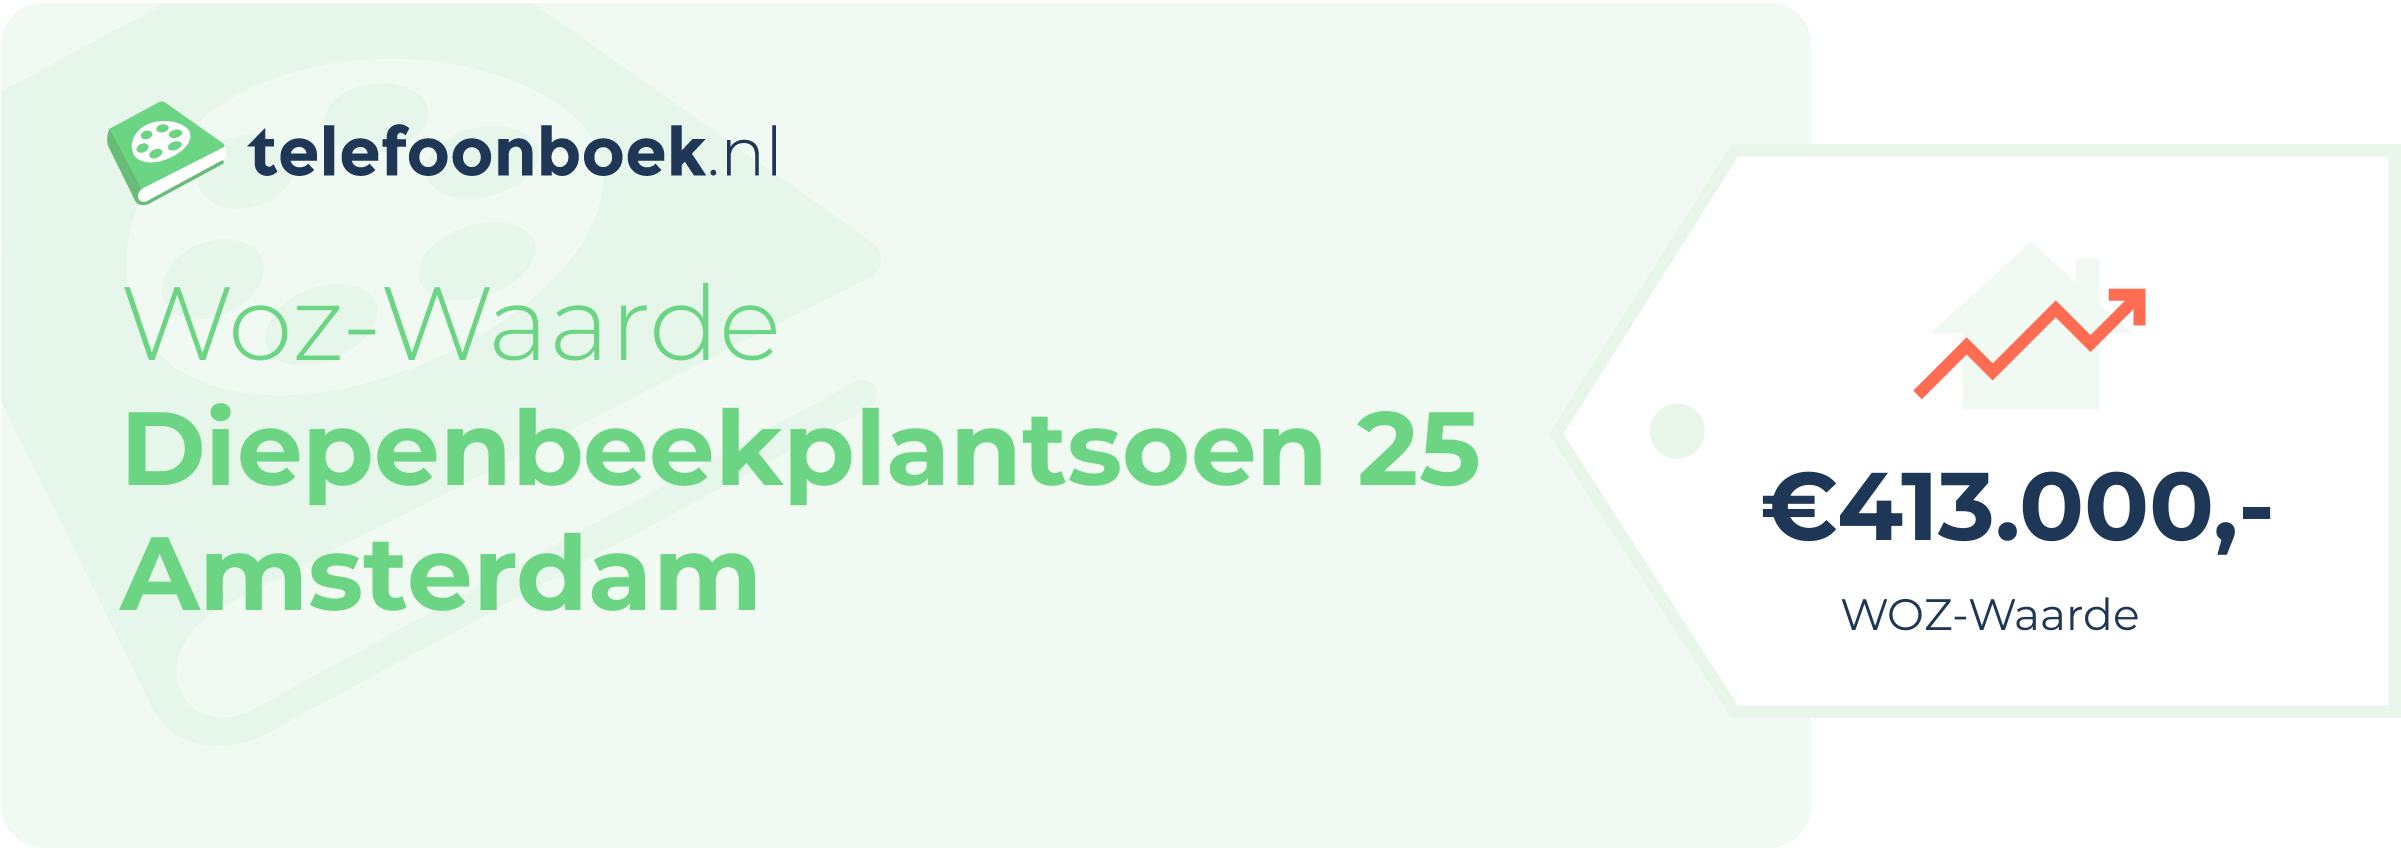 WOZ-waarde Diepenbeekplantsoen 25 Amsterdam